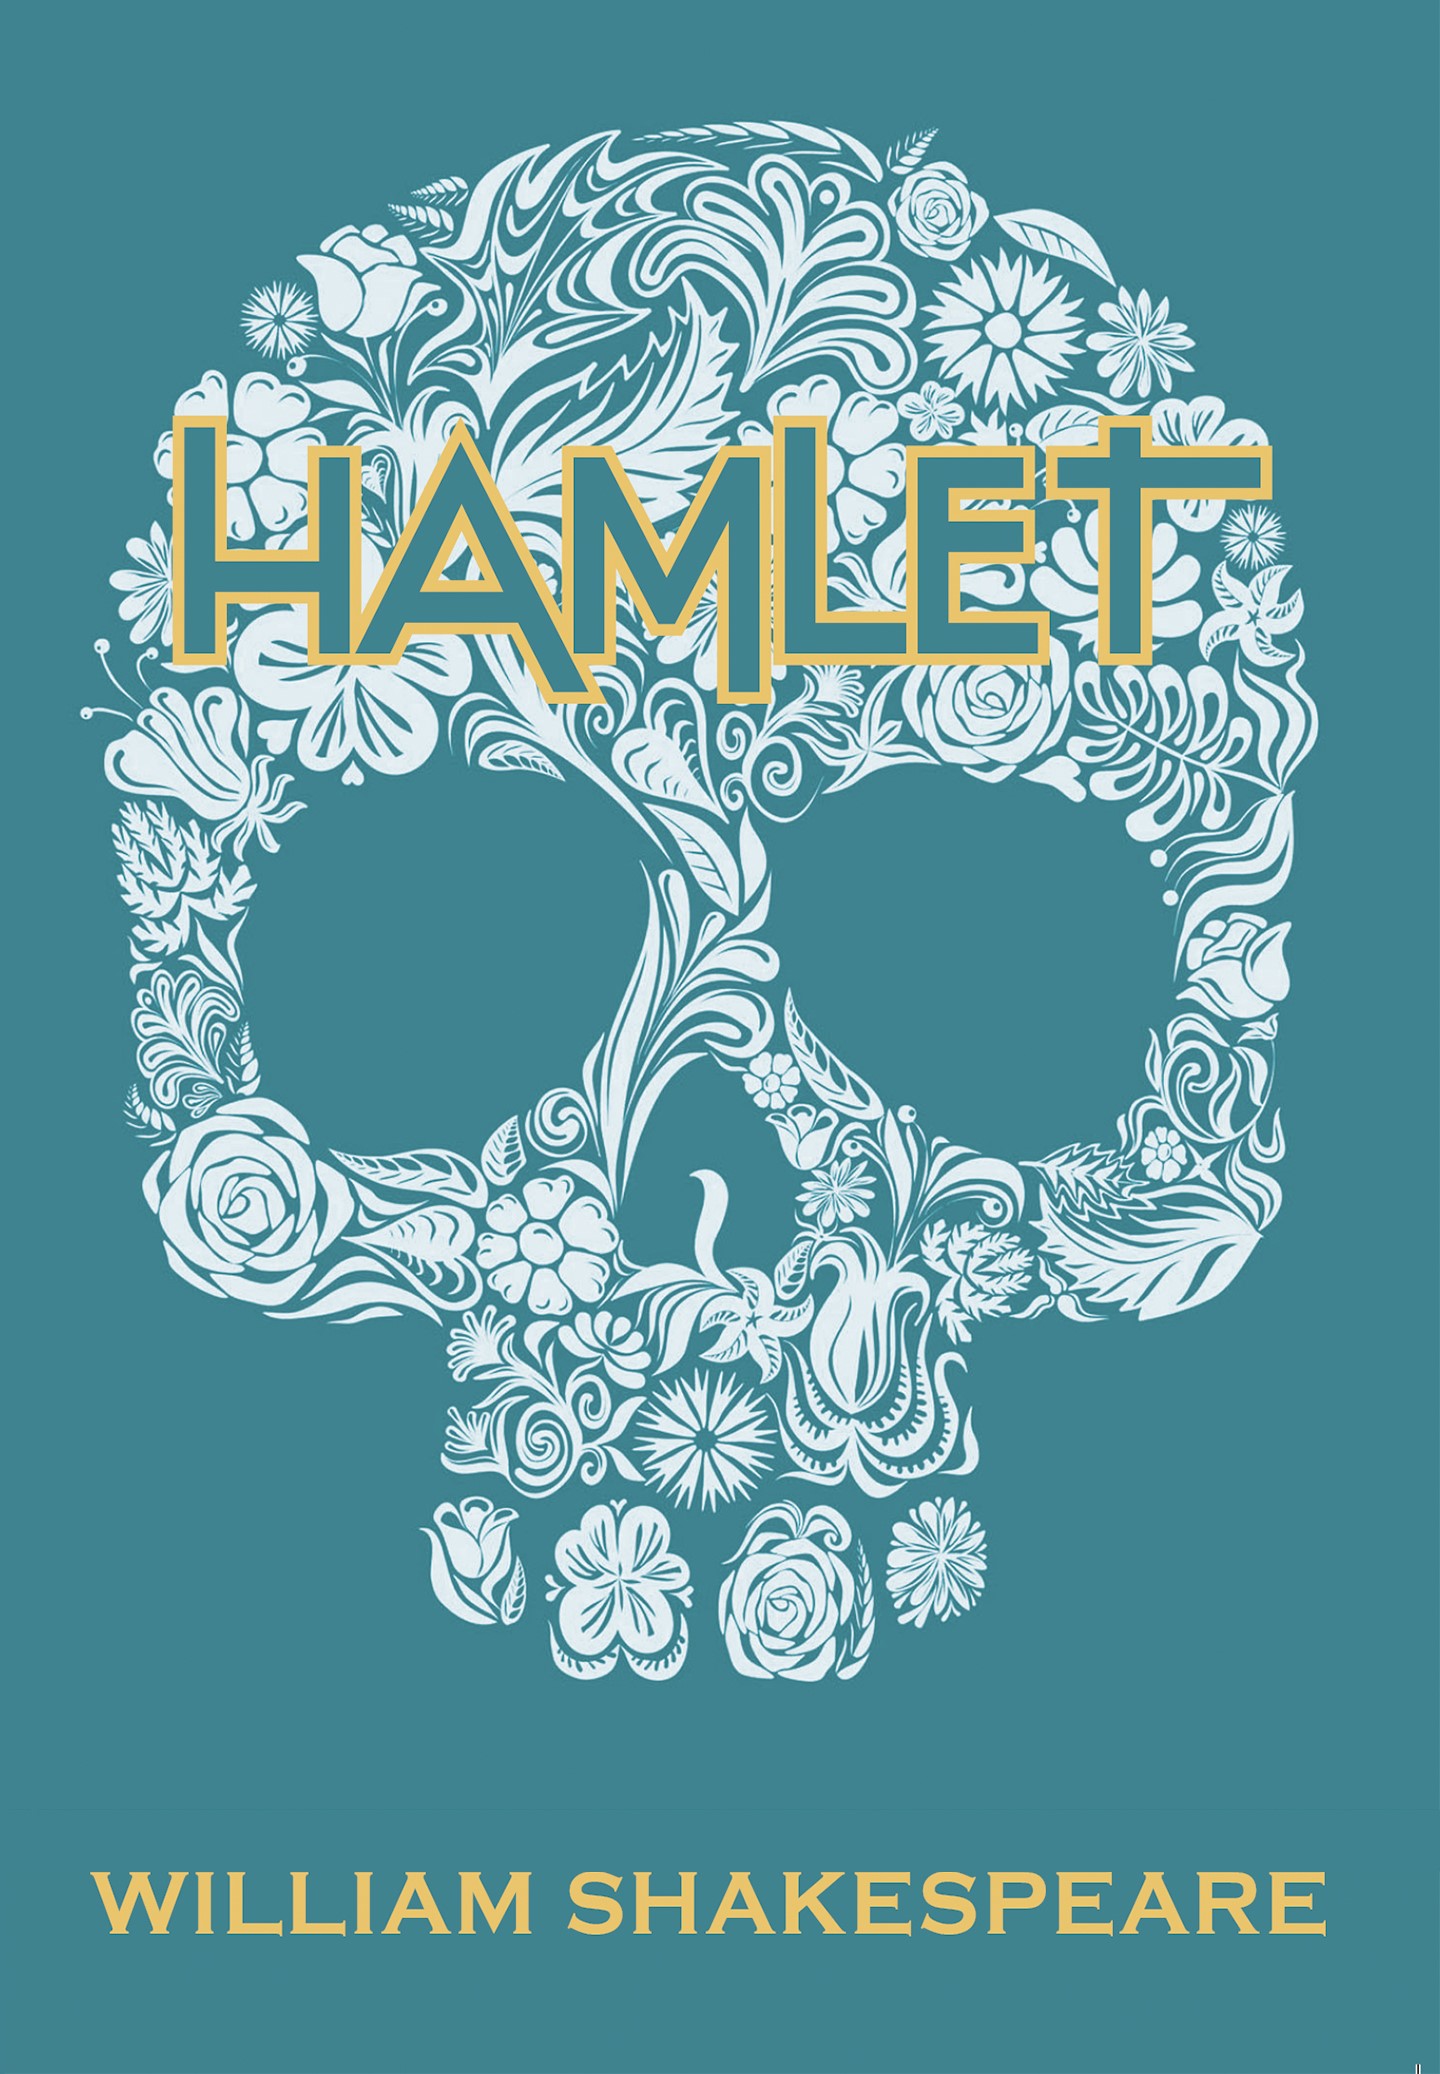 An off-white skull as a book cover design for Hamlet.